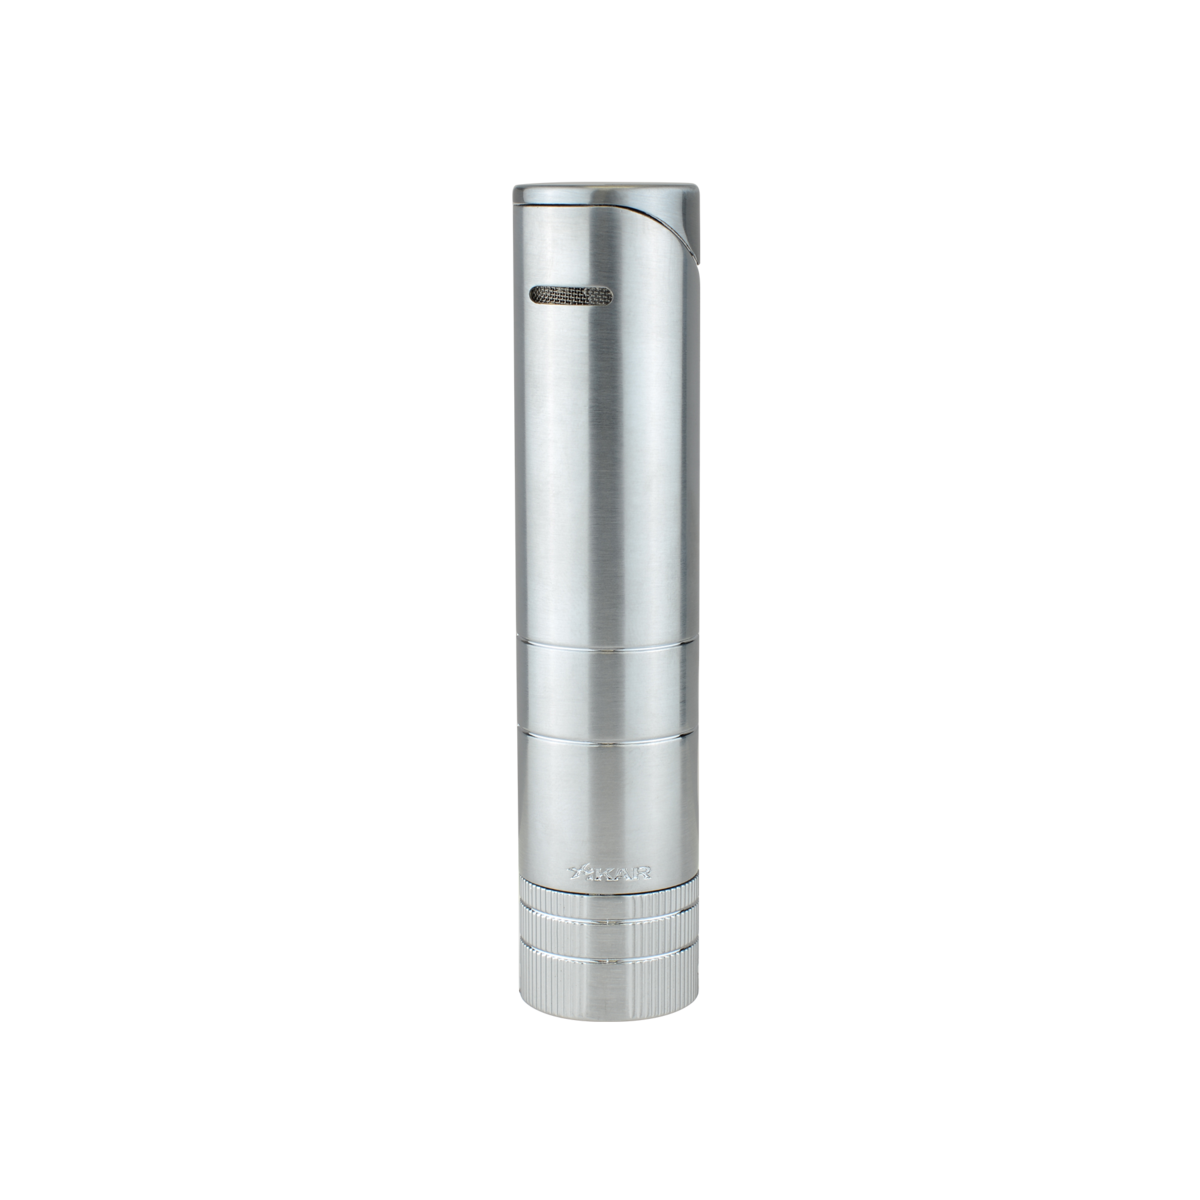 Xikar 5x64 Turrim Lighter | Double Jet Flame